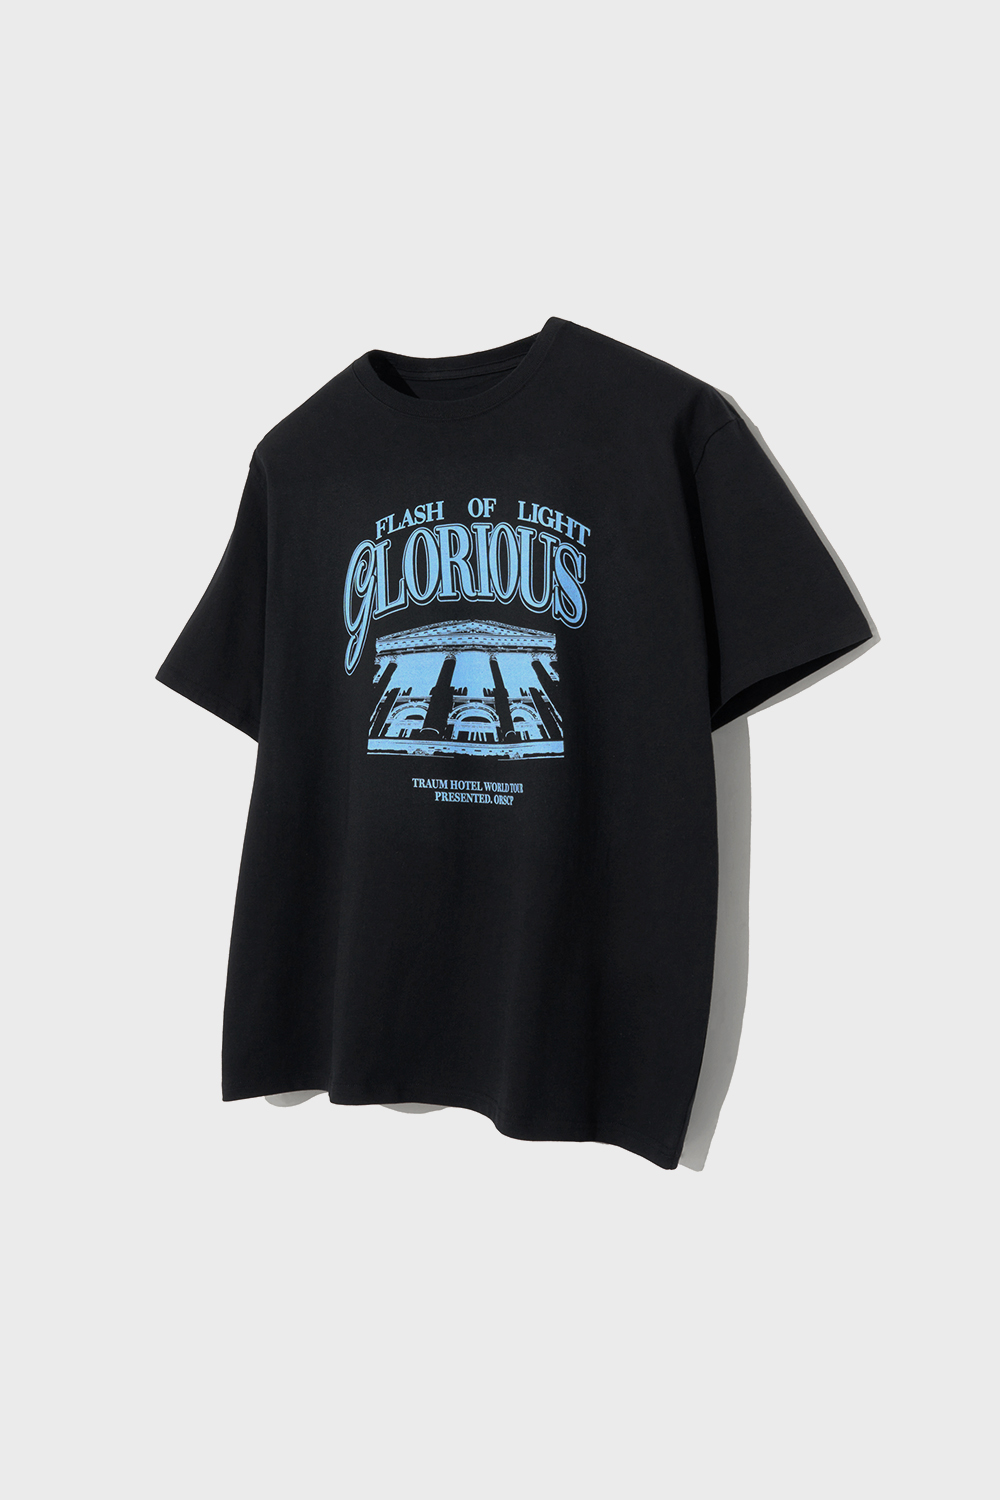 Glorious T-Shirts (Black)